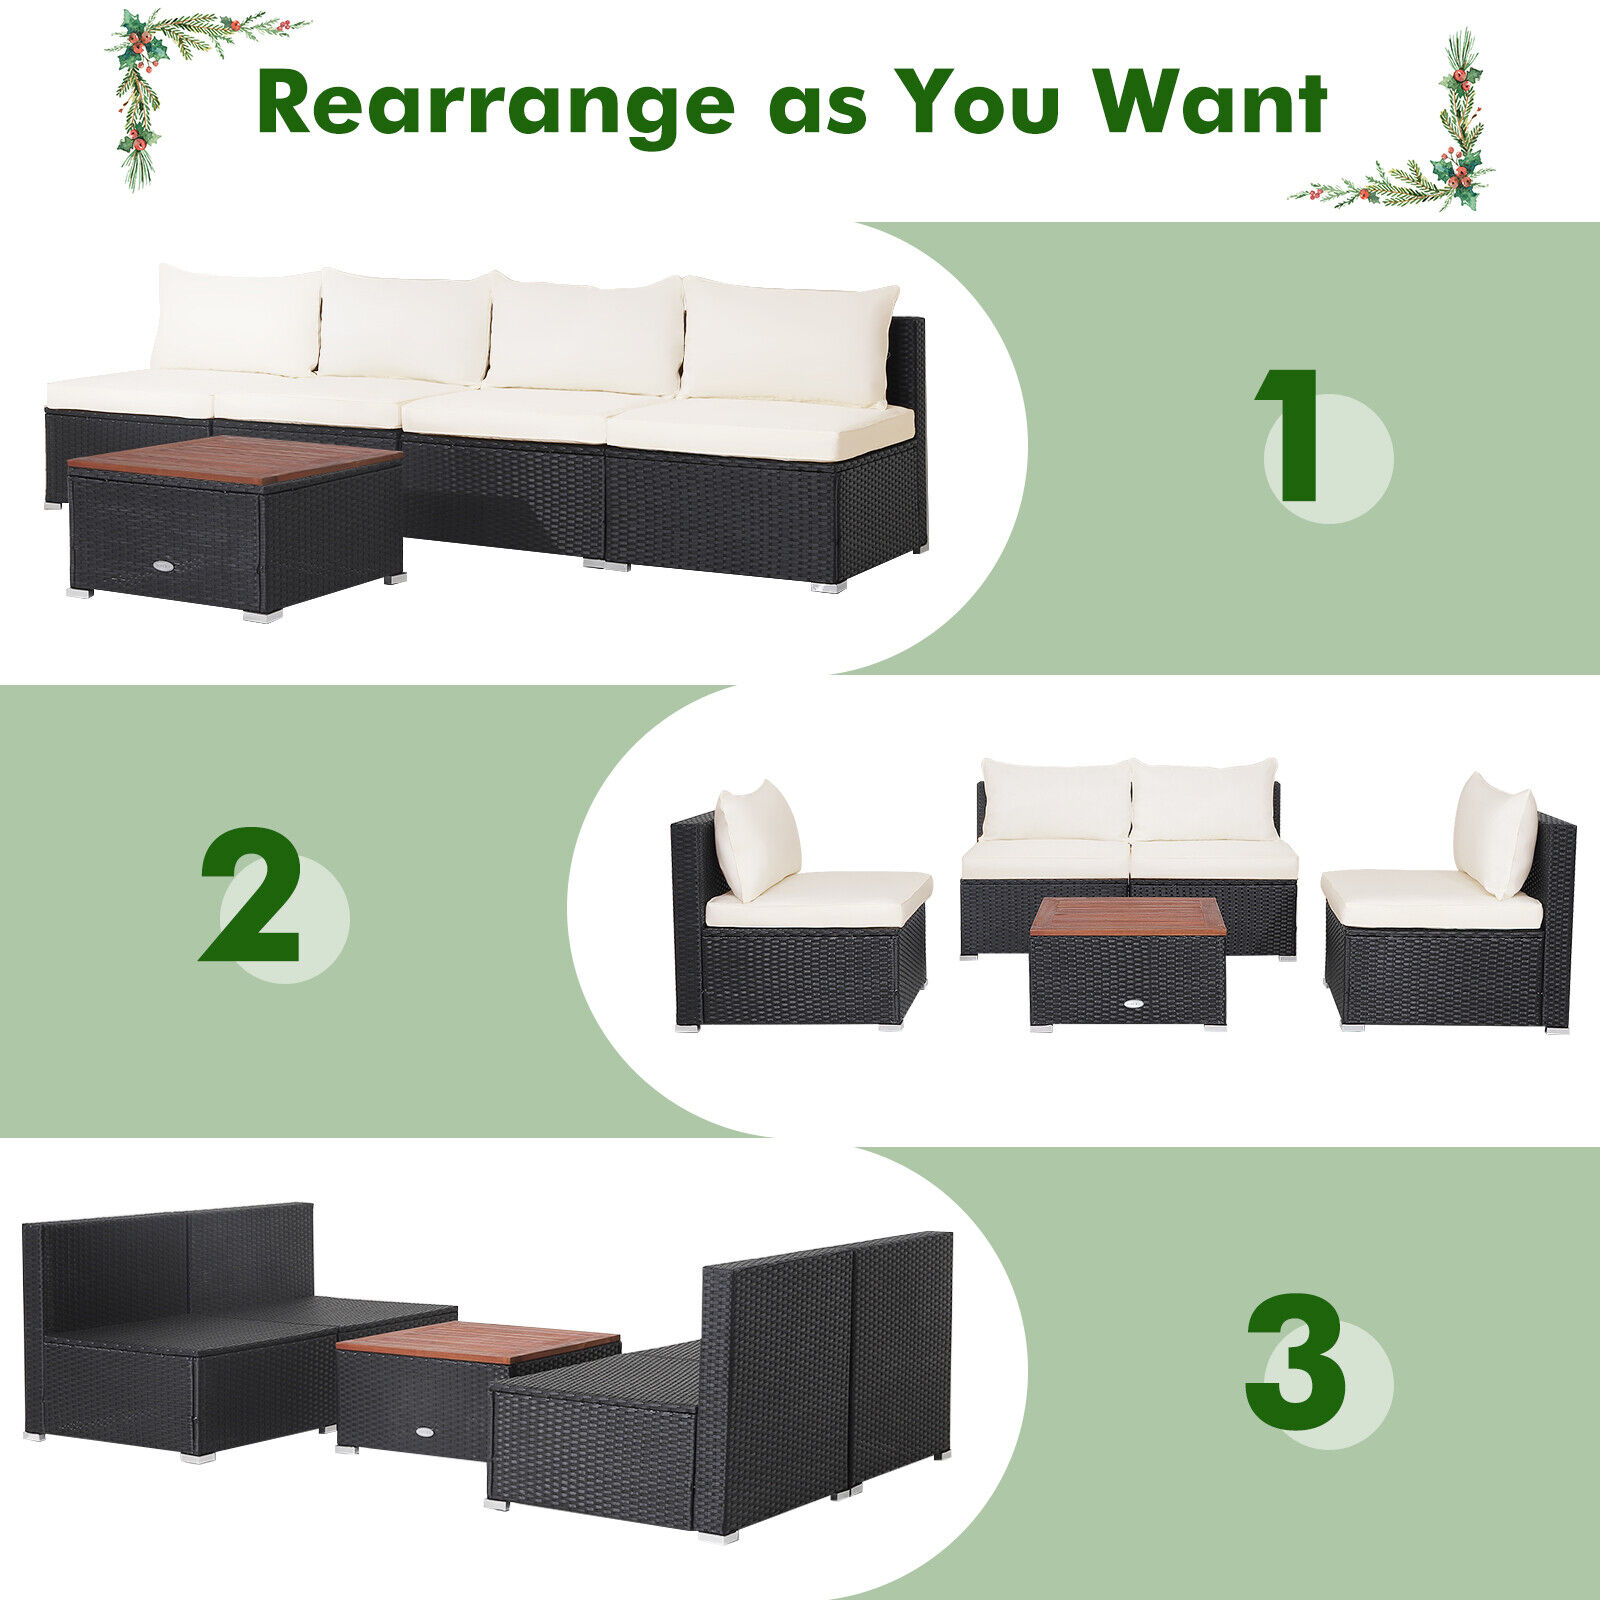 thinkstar 5Pcs Patio Rattan Furniture Set W/ Acacia Wood Coffee Table & Cushions Off White